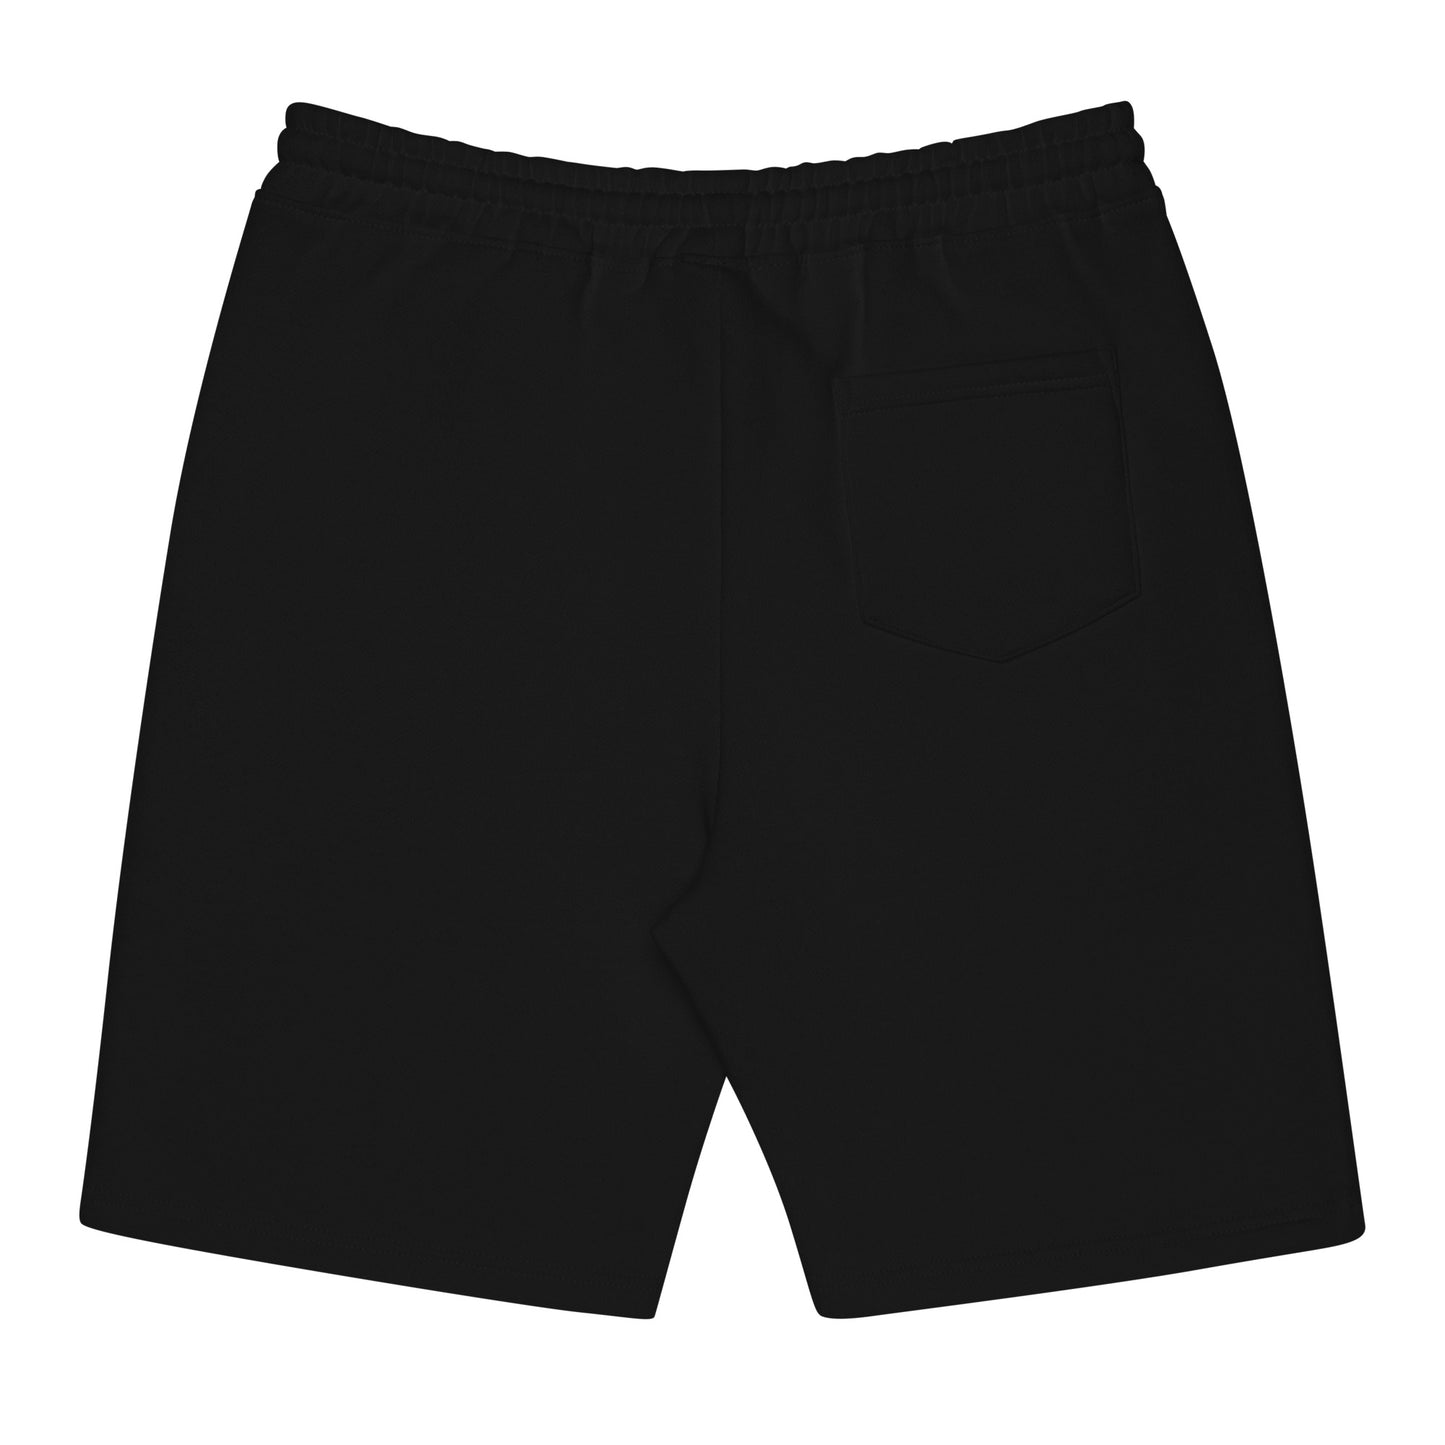 Men's Elevate Athletics fleece shorts